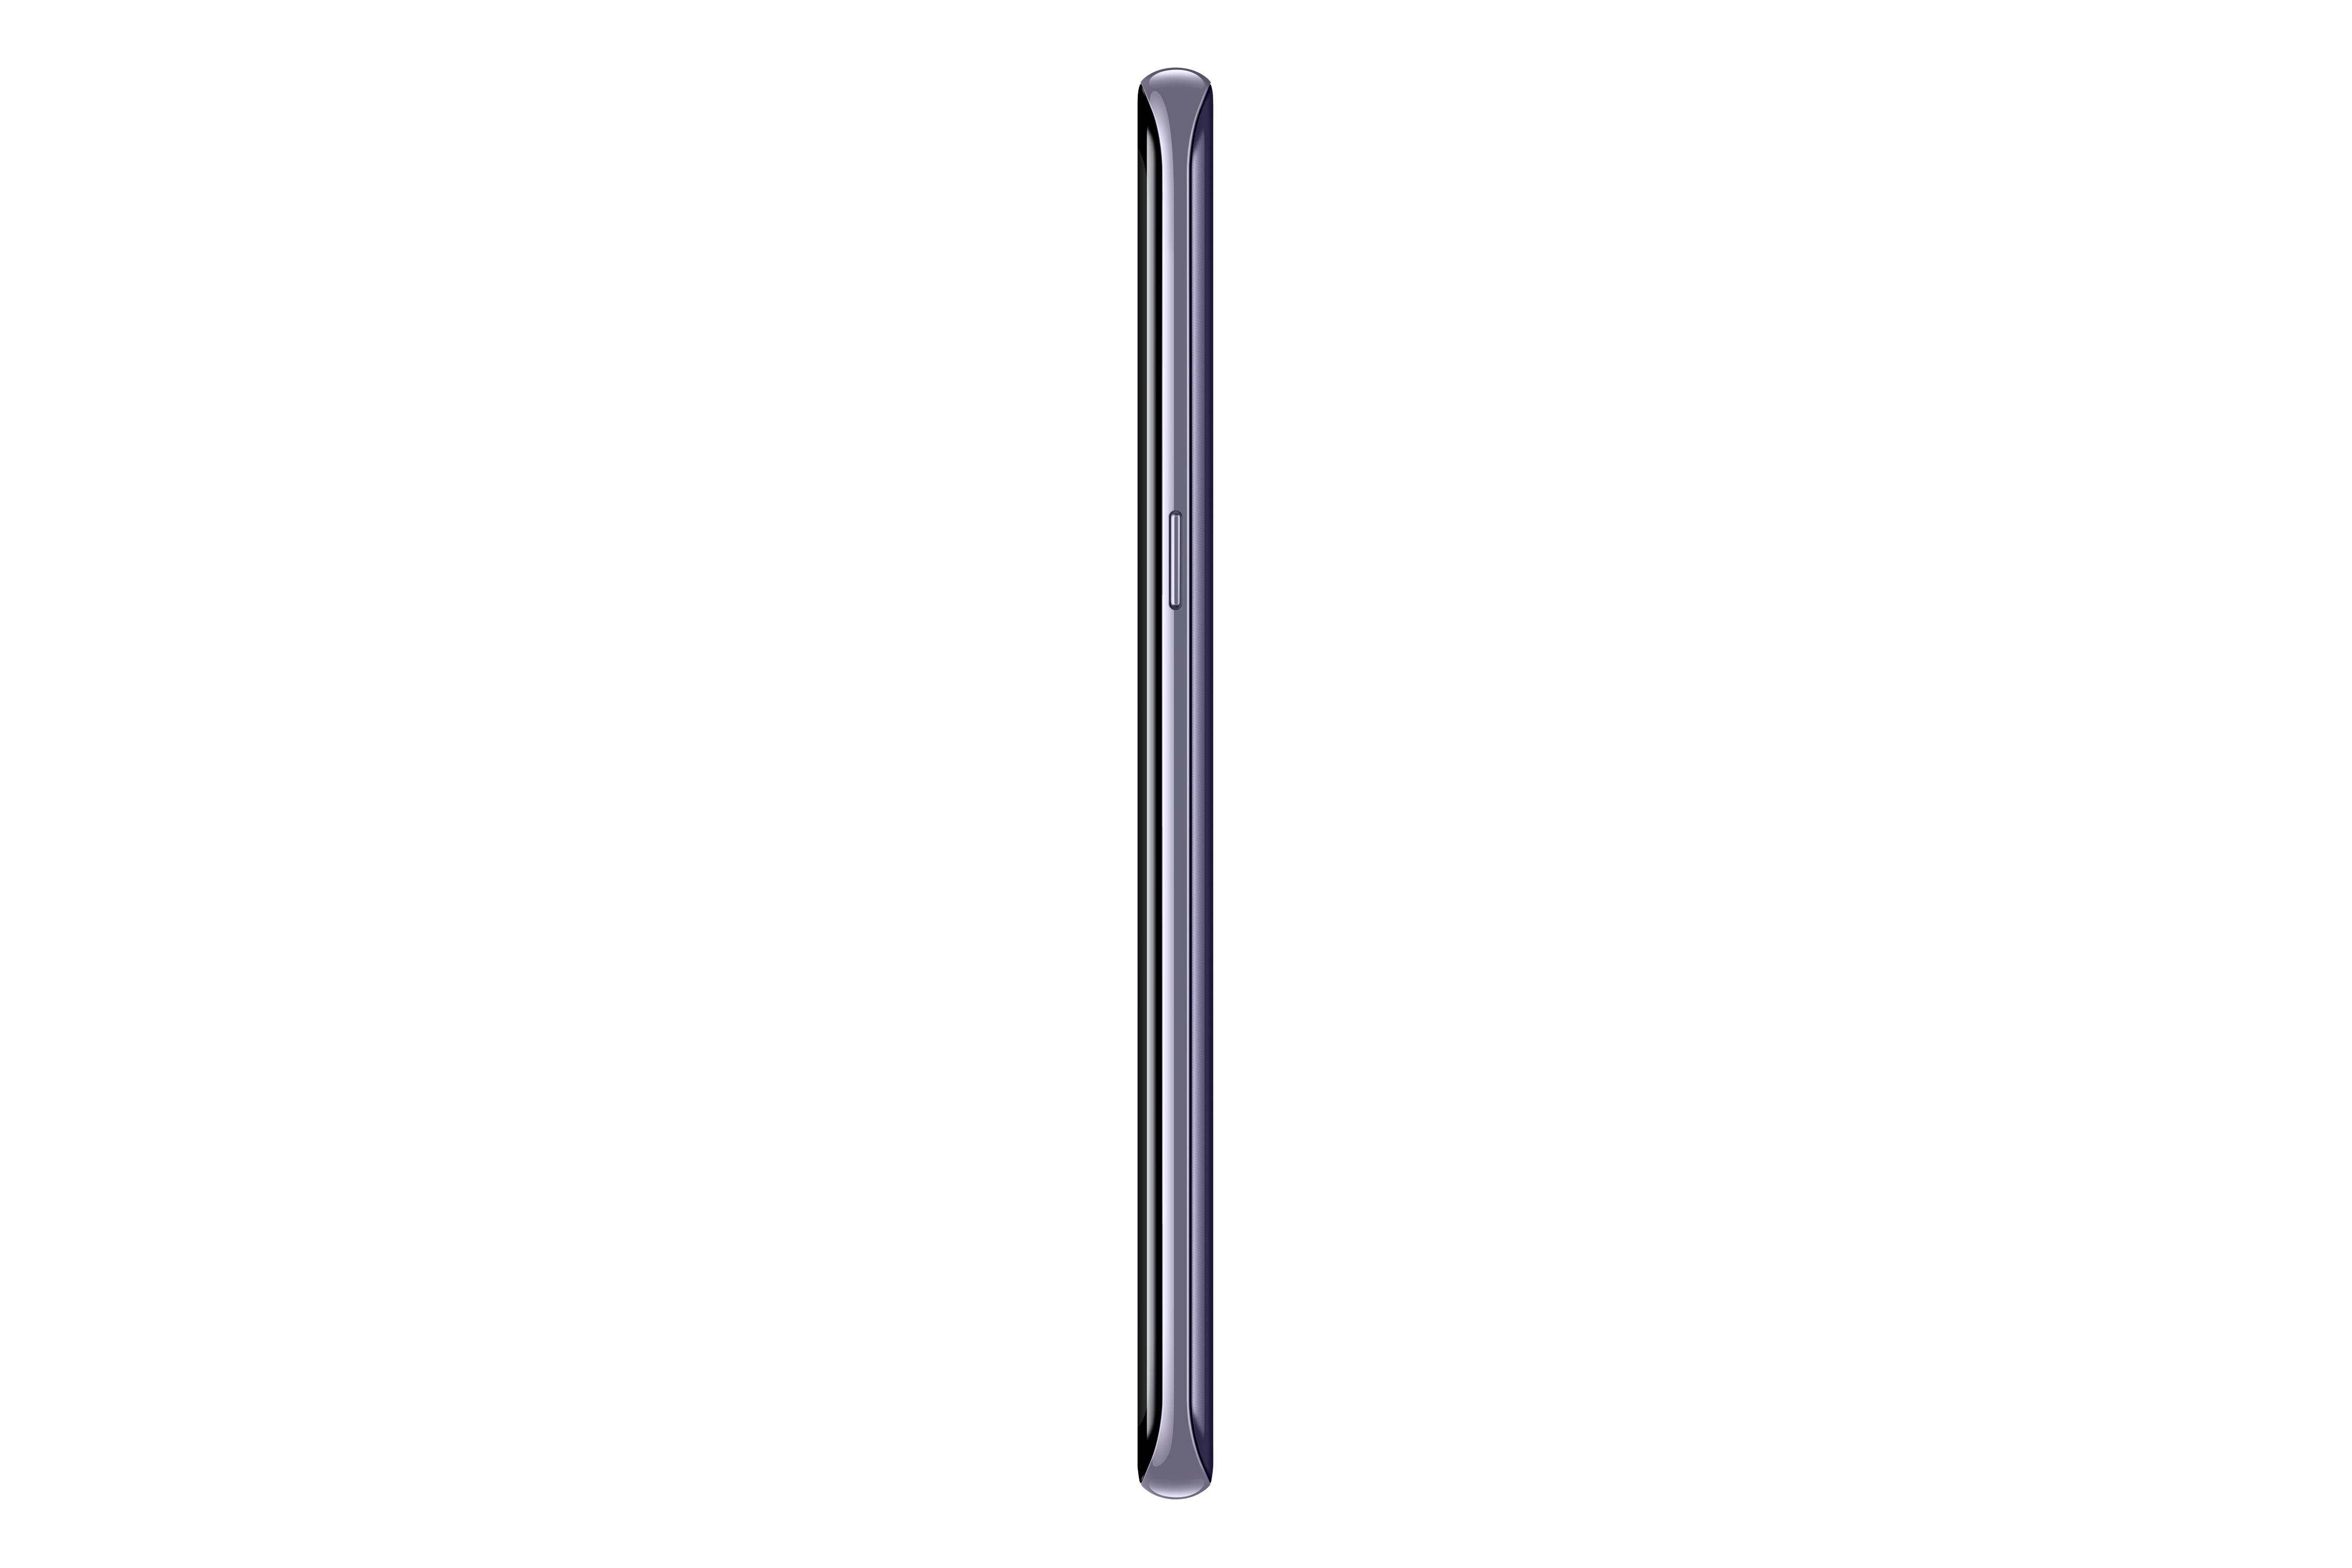 Samsung SM-G950UZVASPR 64GB Orchid Gray Galaxy S8 Smartphone (Sprint) - image 3 of 6